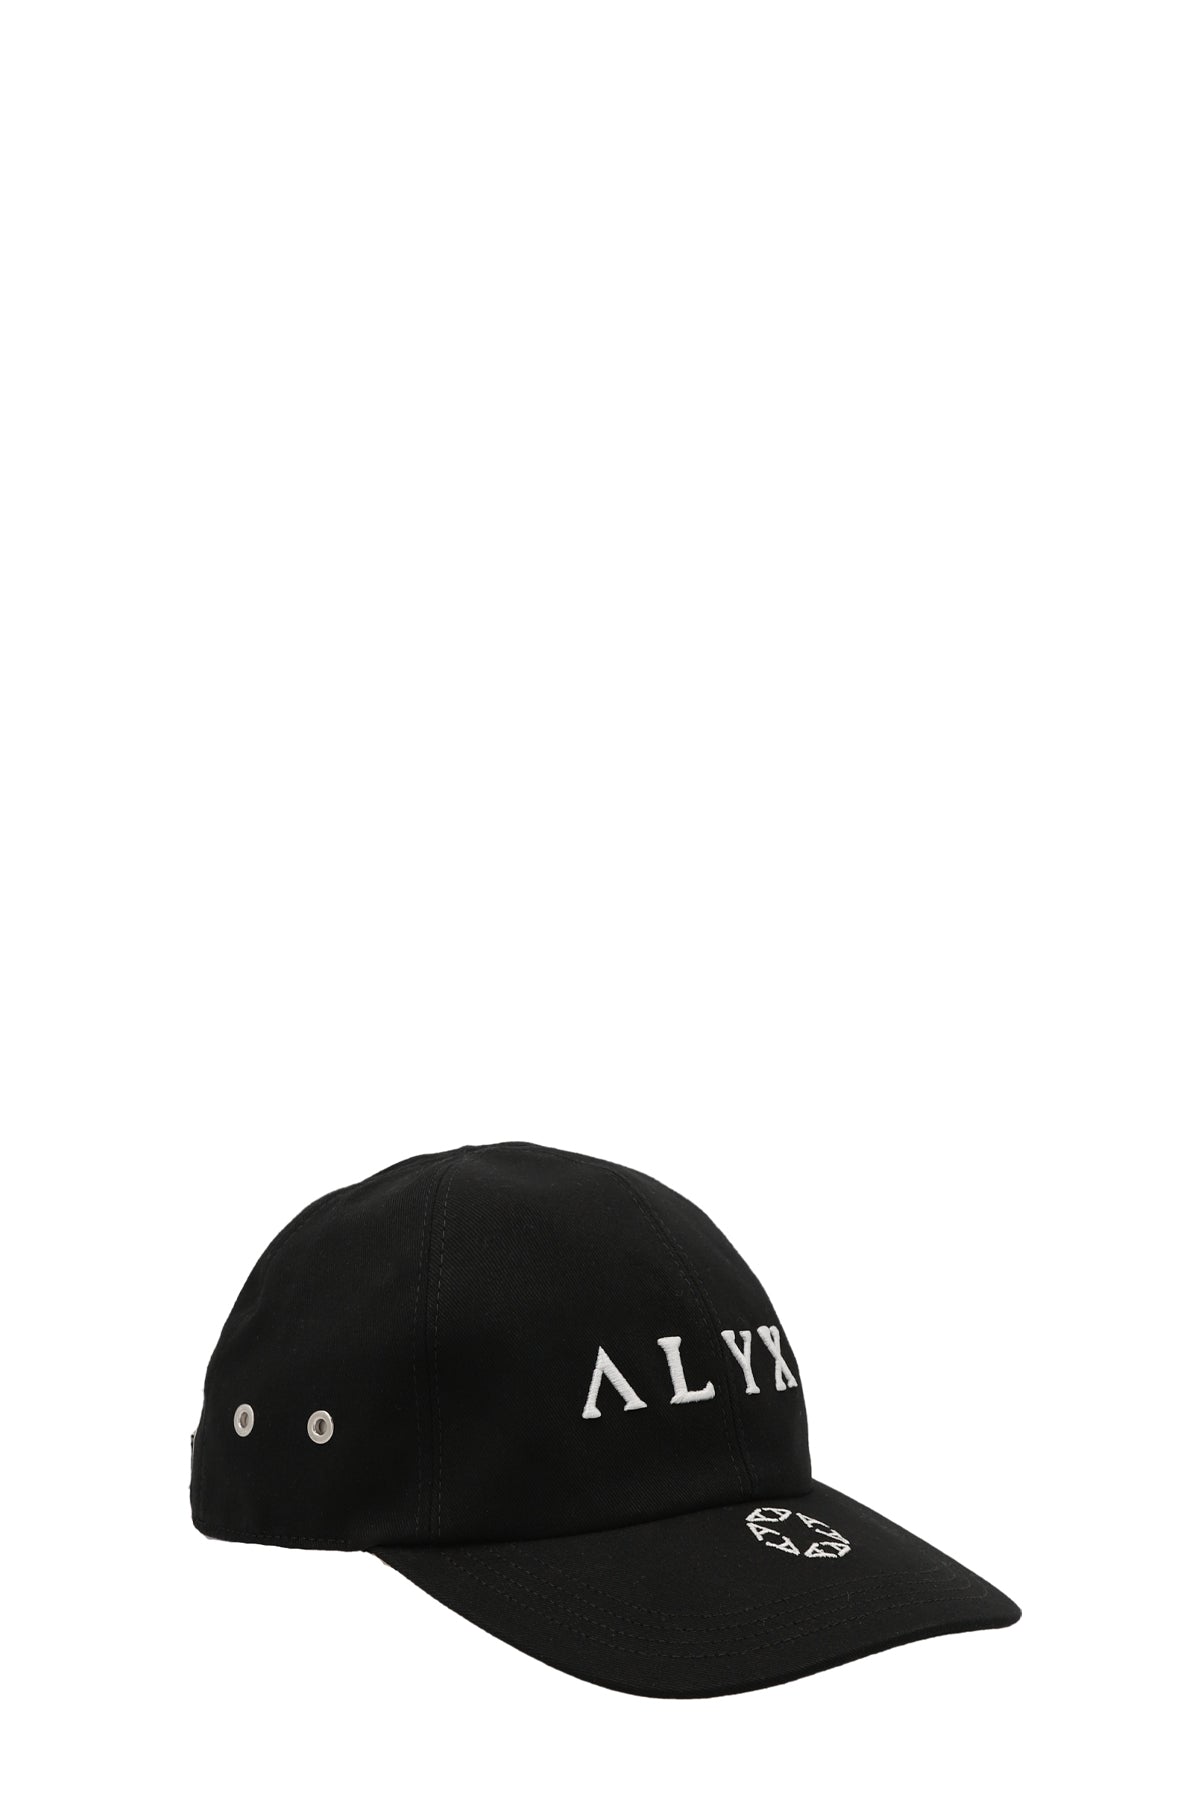 1017-ALYX-9SM LOGO CAP